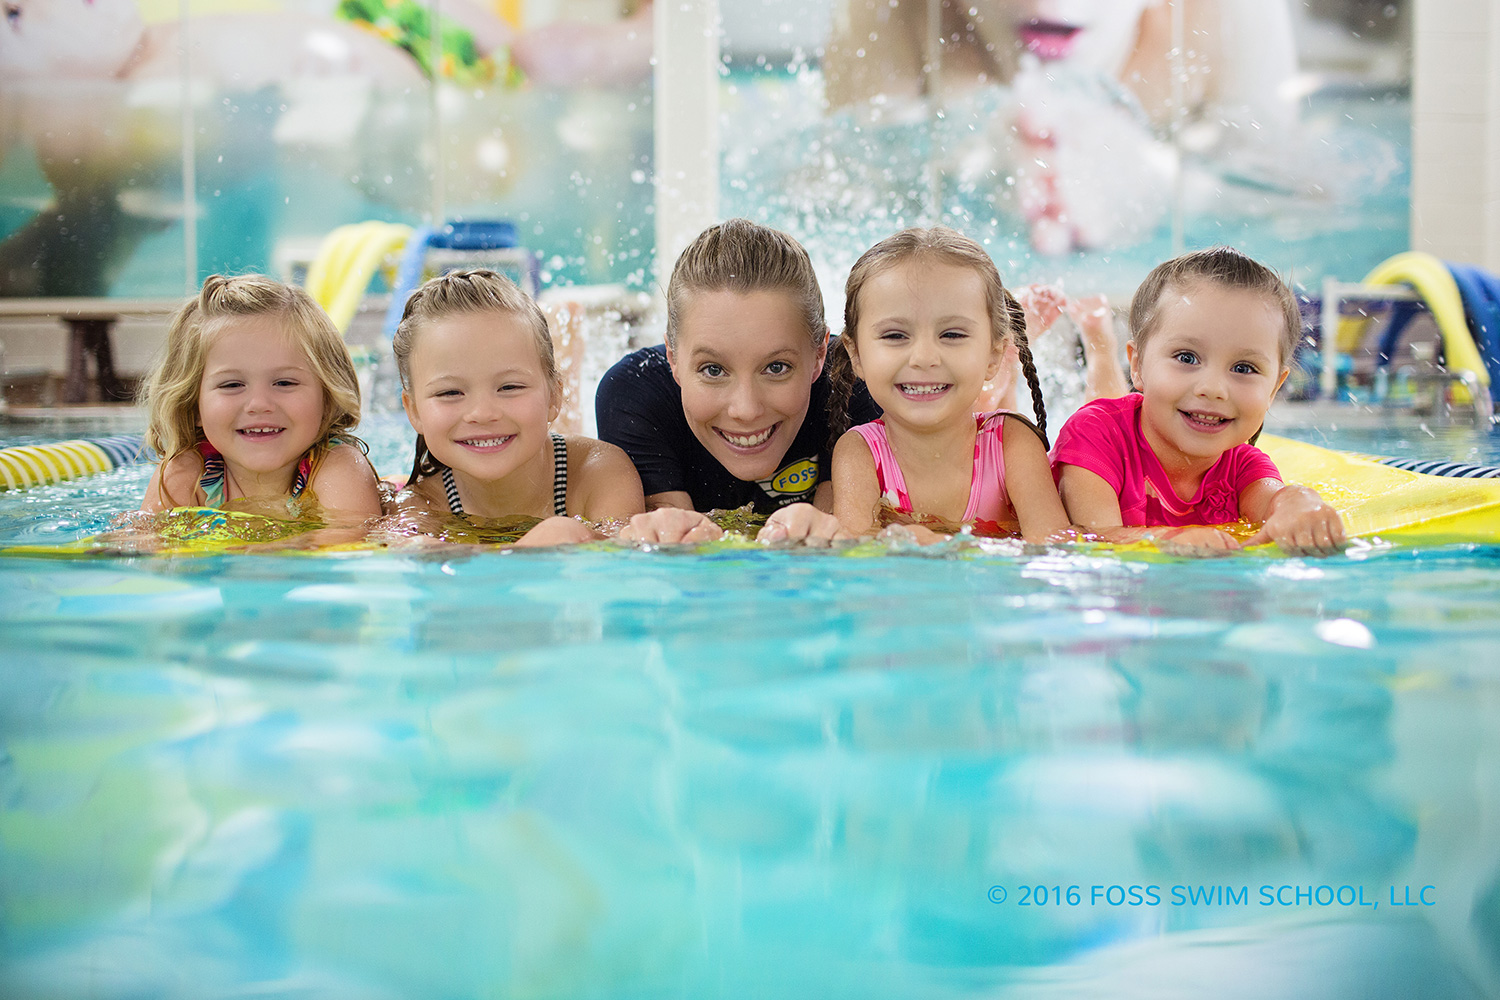 4 Reasons to Love Foss Swim School - Foss Swim School